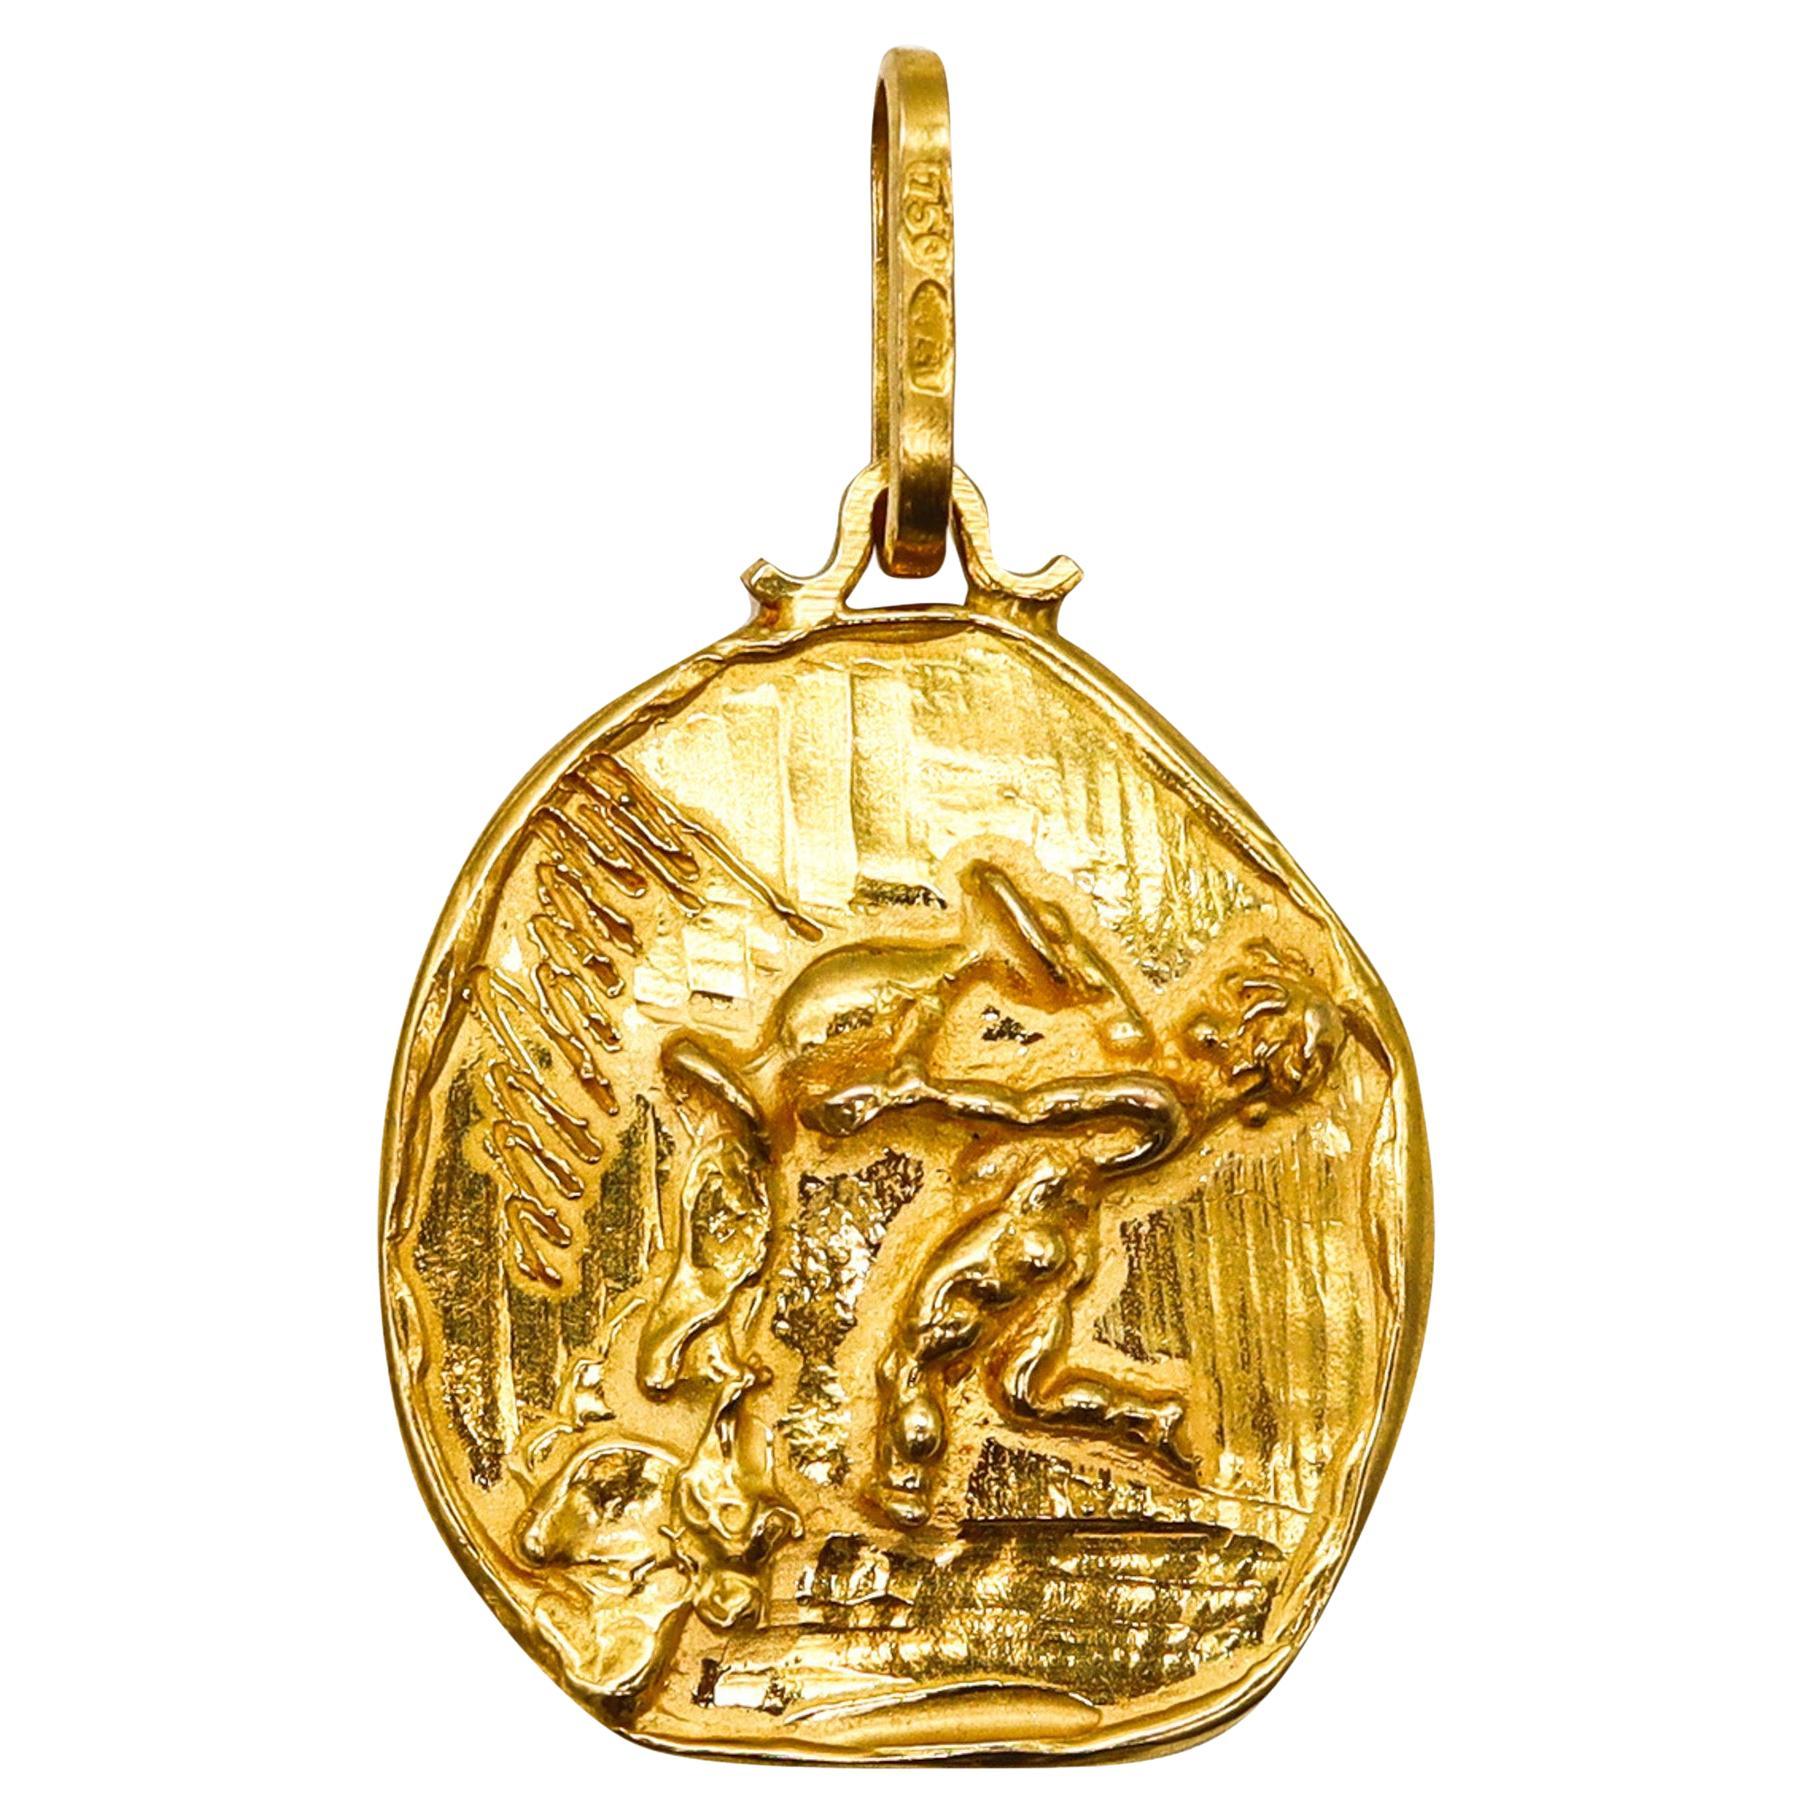 Germano Nino D'Antonio 1970 Renaissance Revival Medallion In 18Kt Yellow Gold For Sale